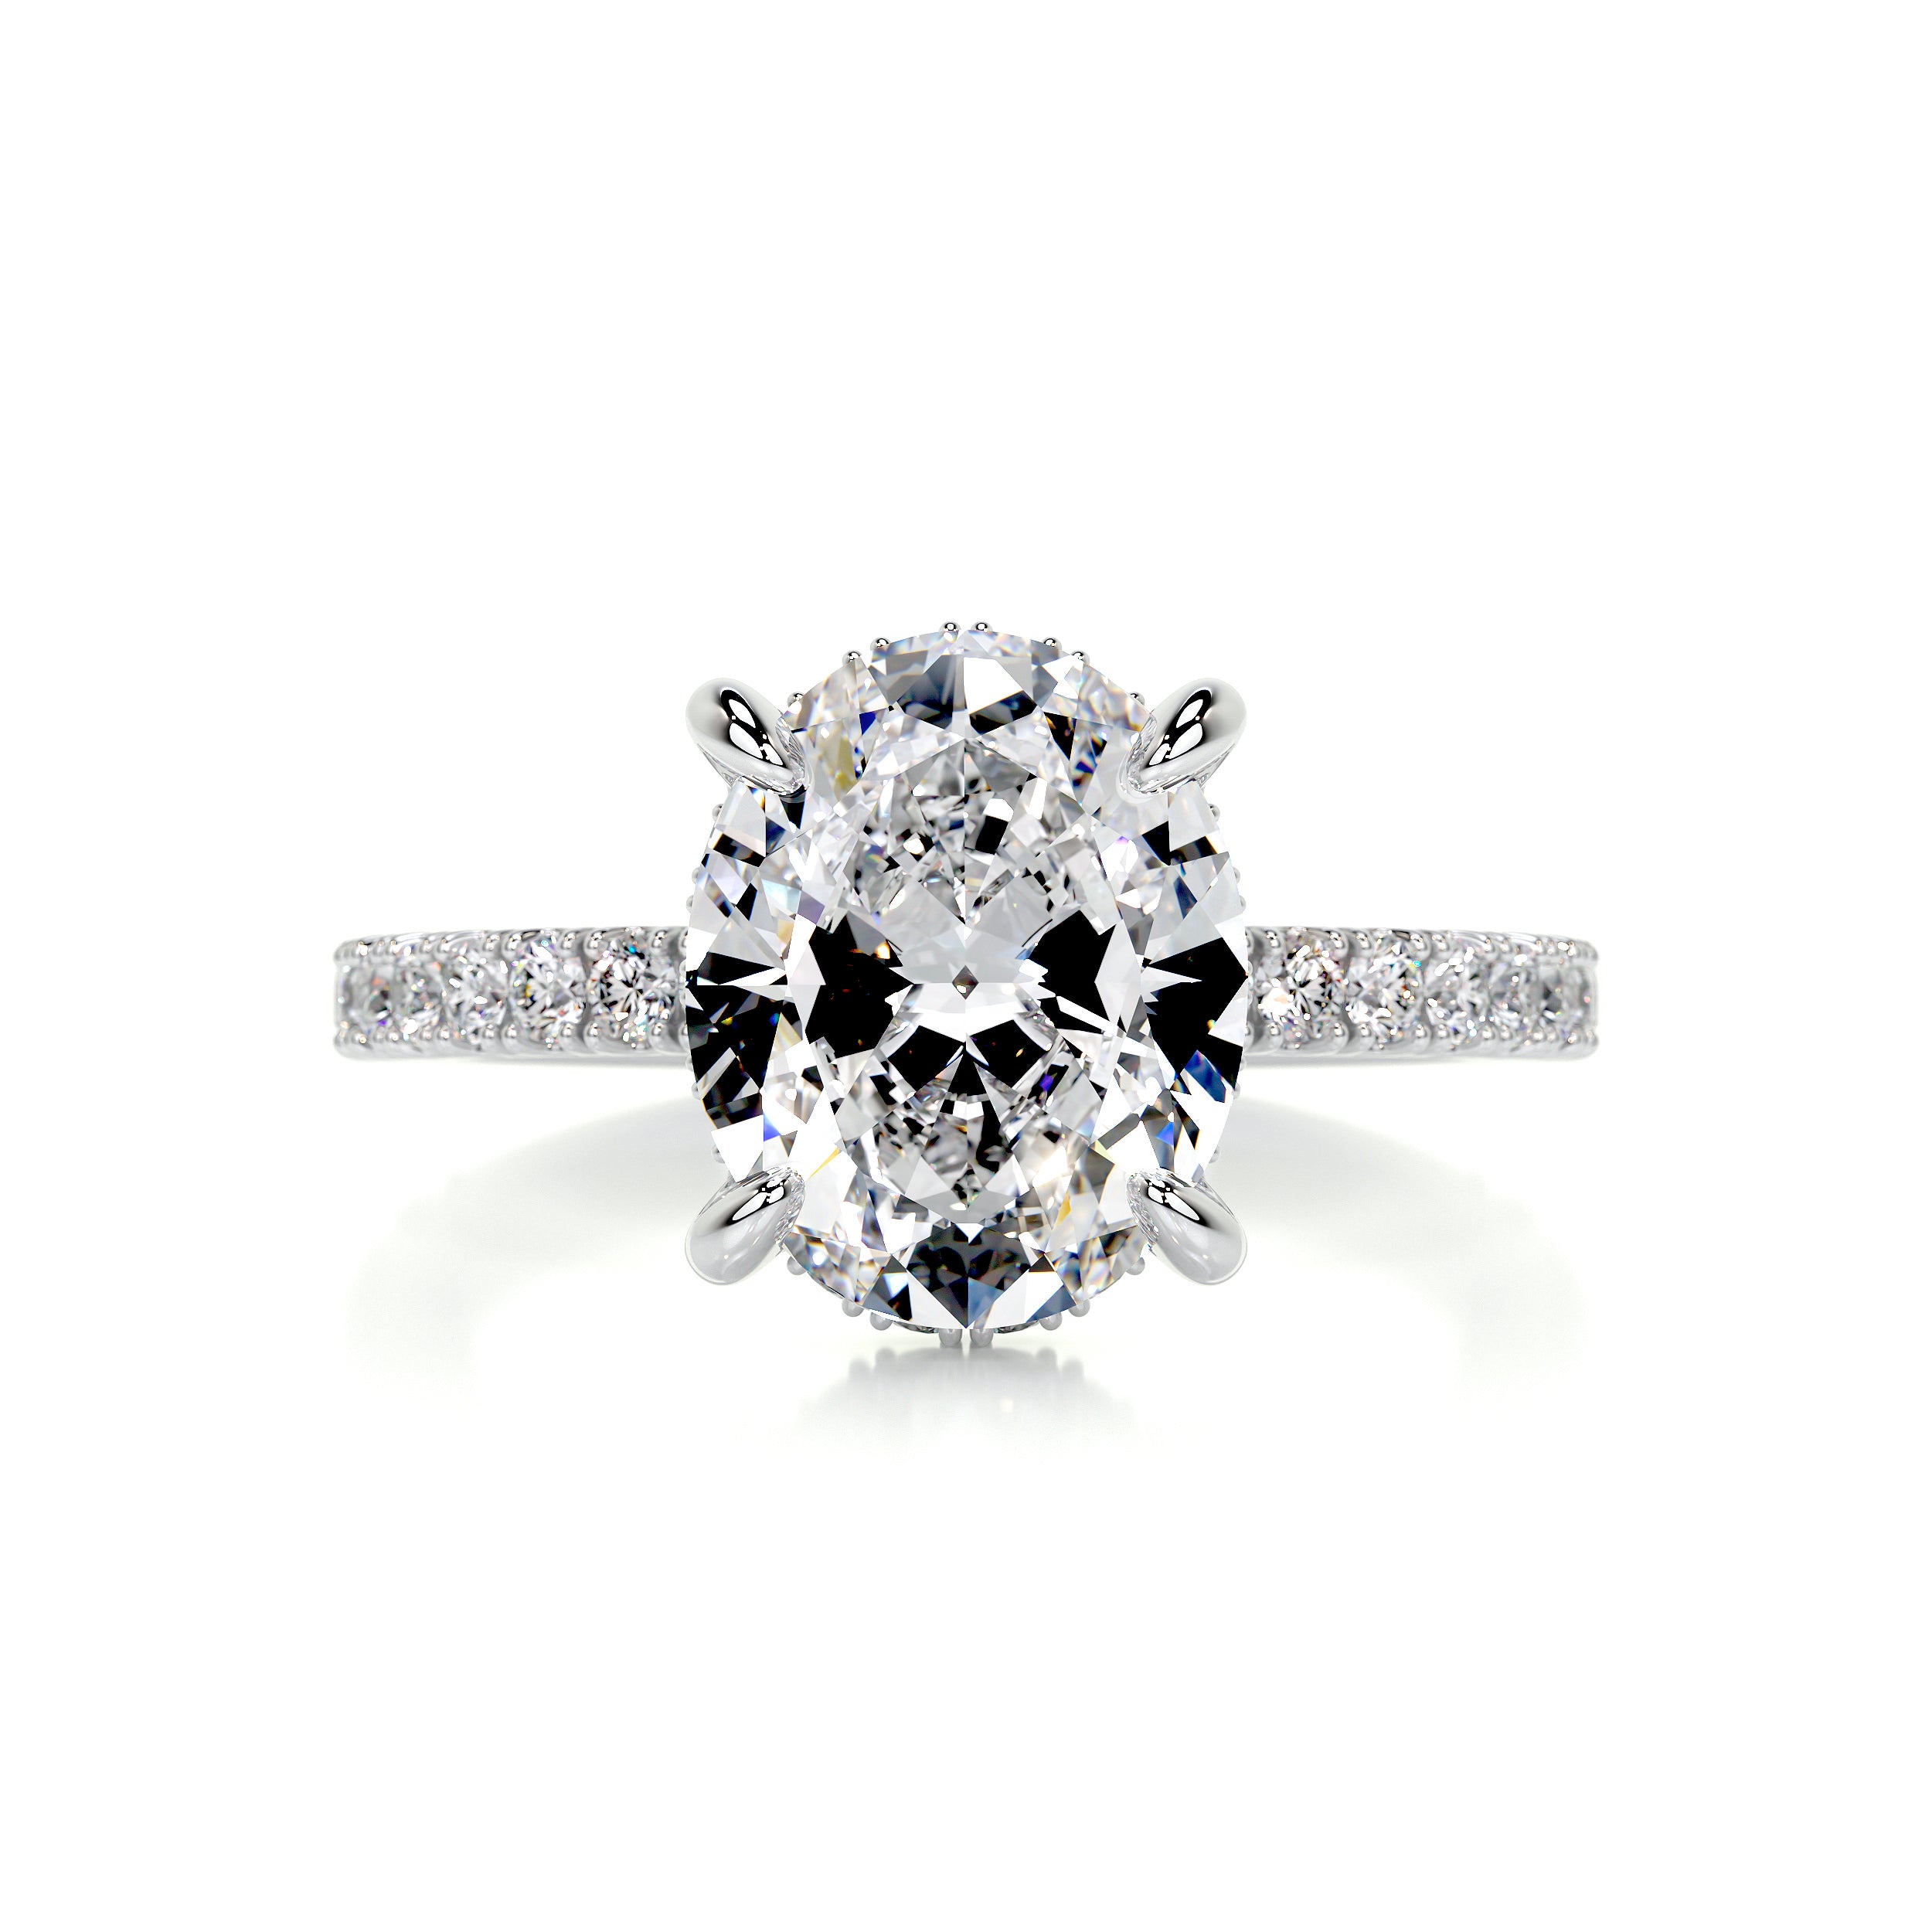 Lucy Diamond Engagement Ring   (2.5 Carat) -14K White Gold